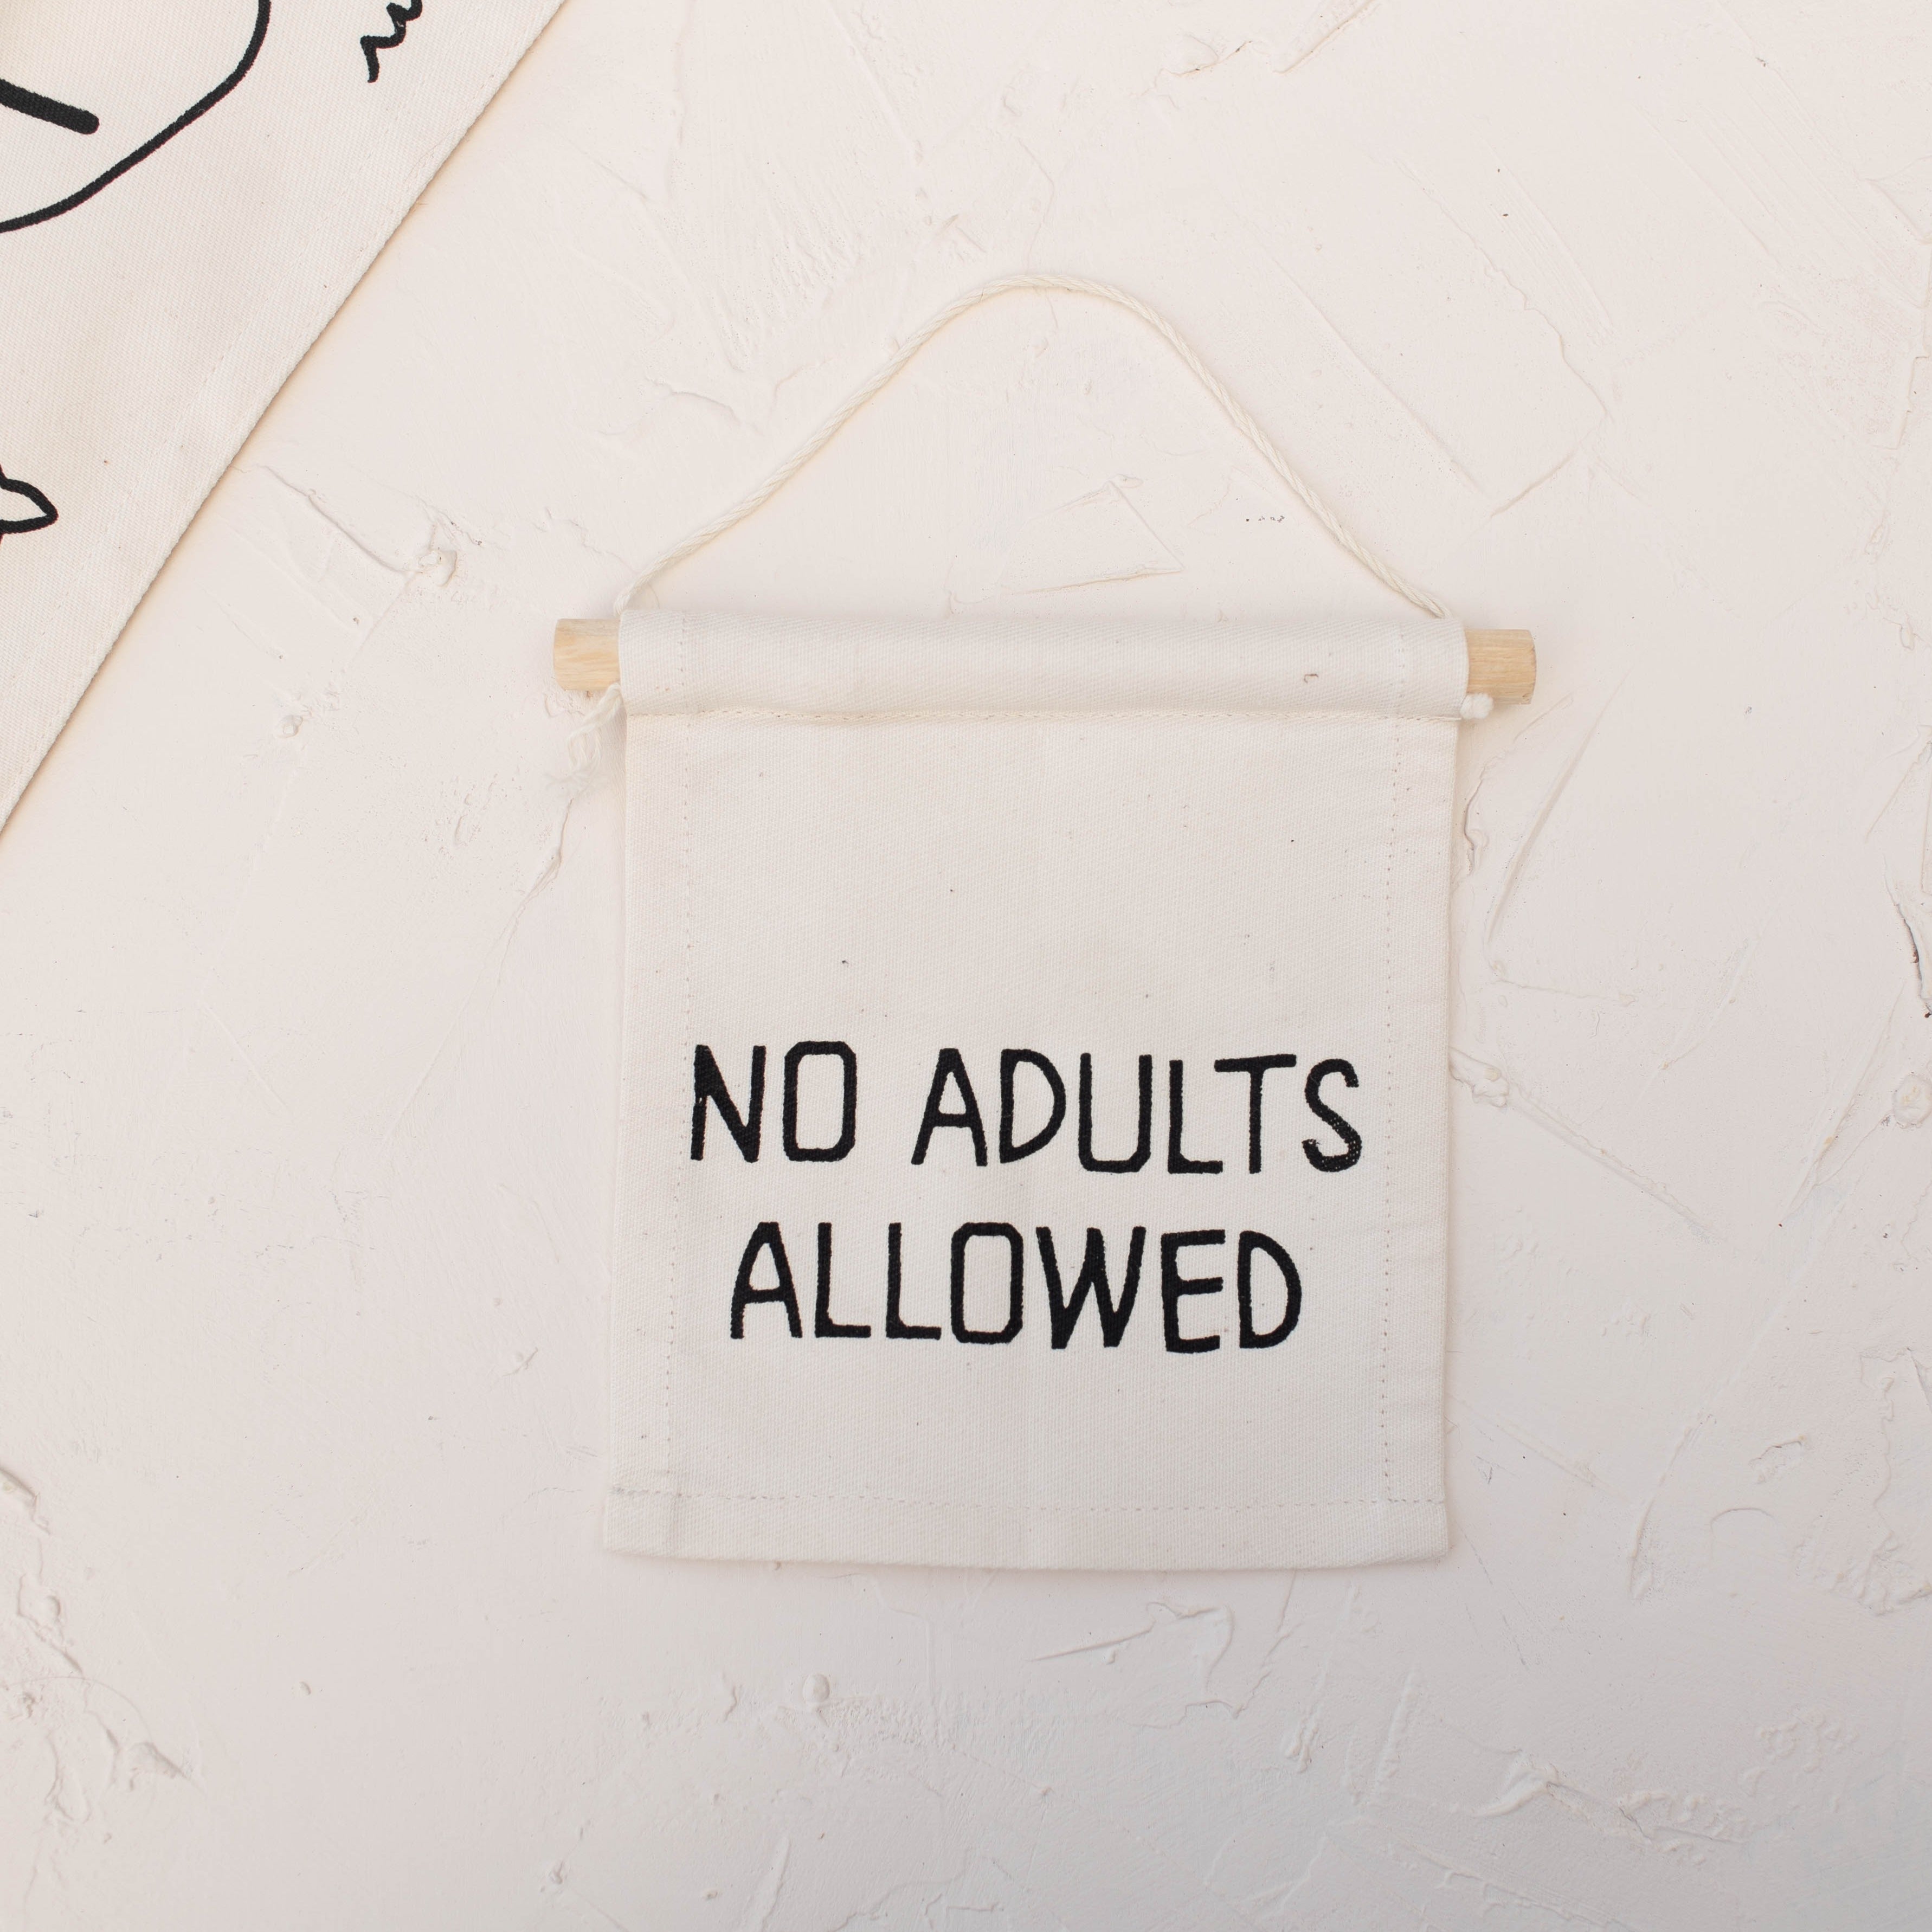 no adults allowed hang sign